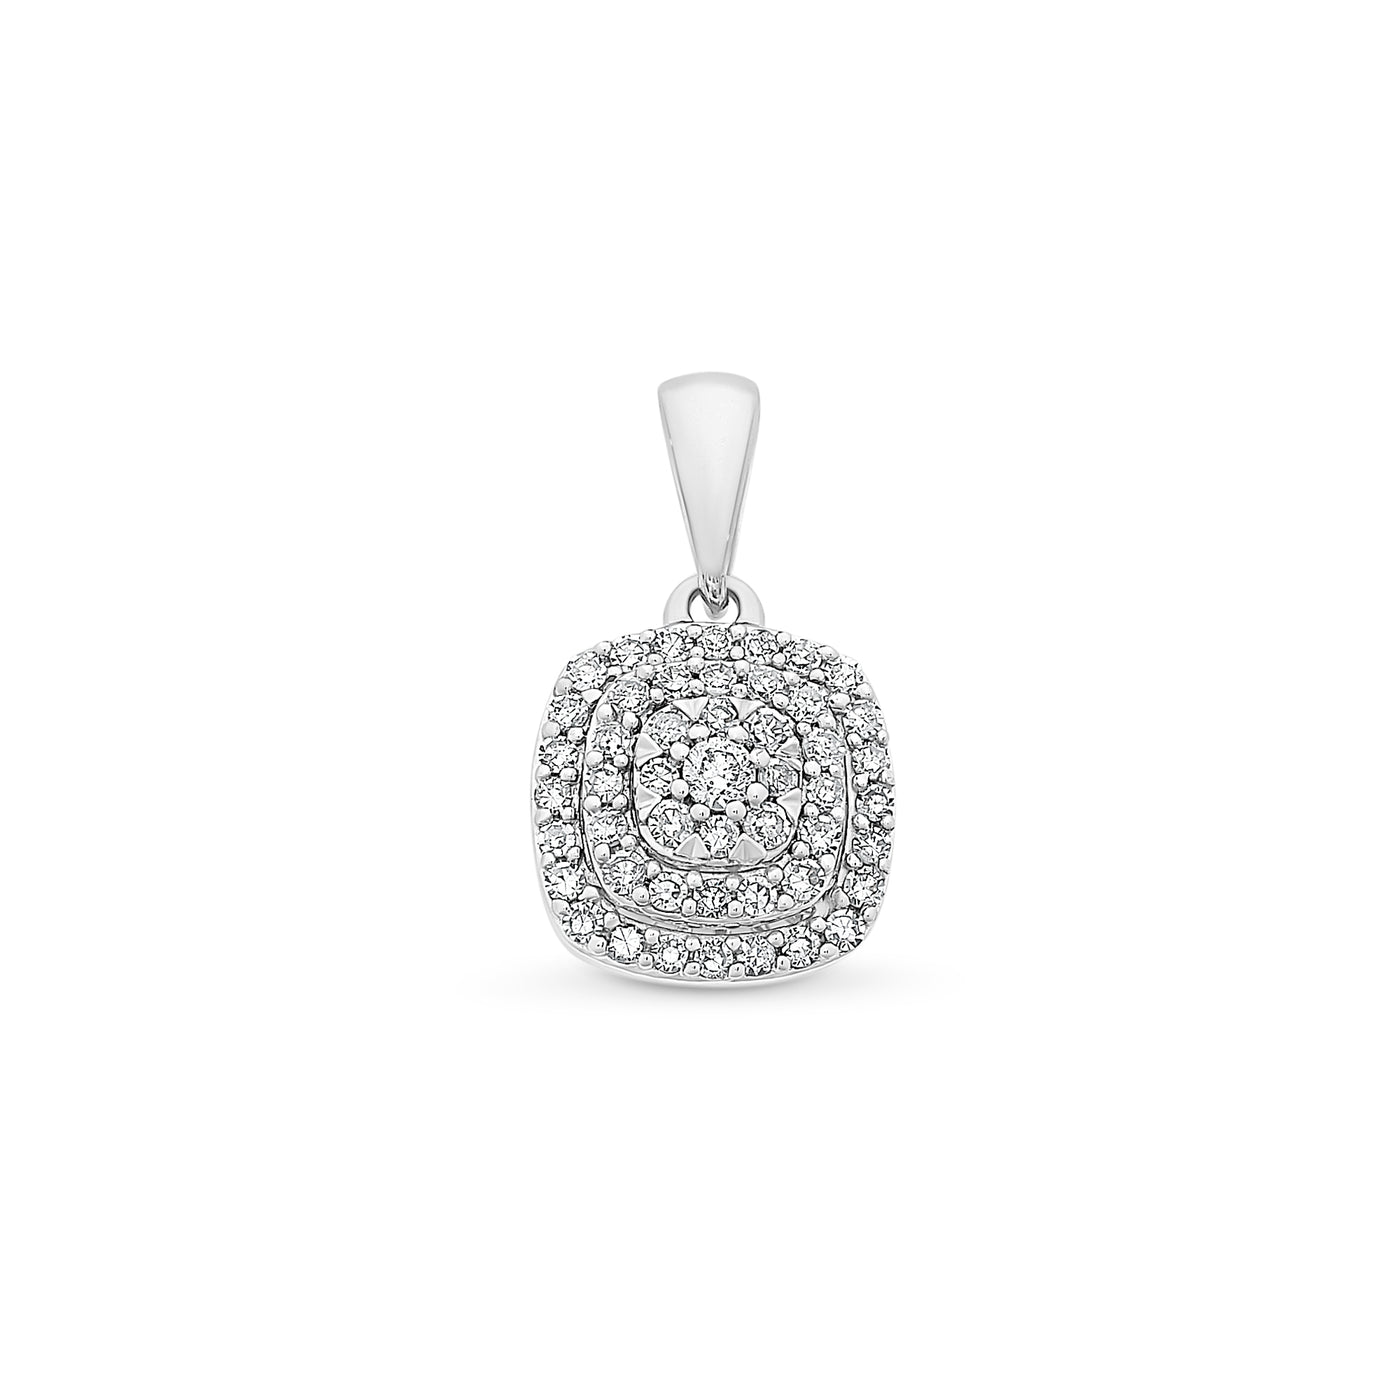 Diamond pendant in 9k white gold